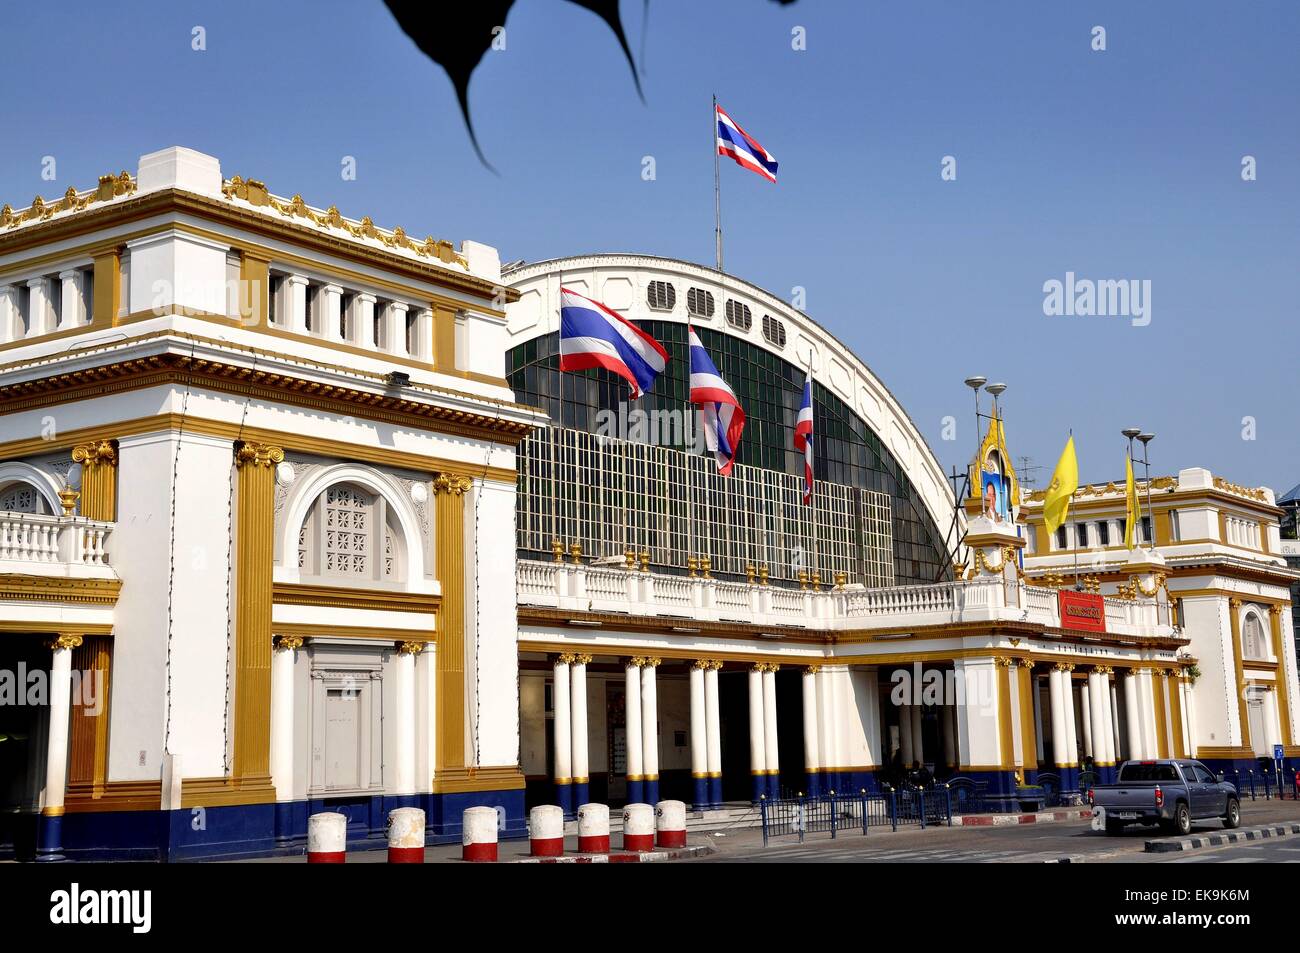 Bangkok, Thailand:  Grandiose entrance facade of Bangkok's Hua Lamphong Railway Station Stock Photo